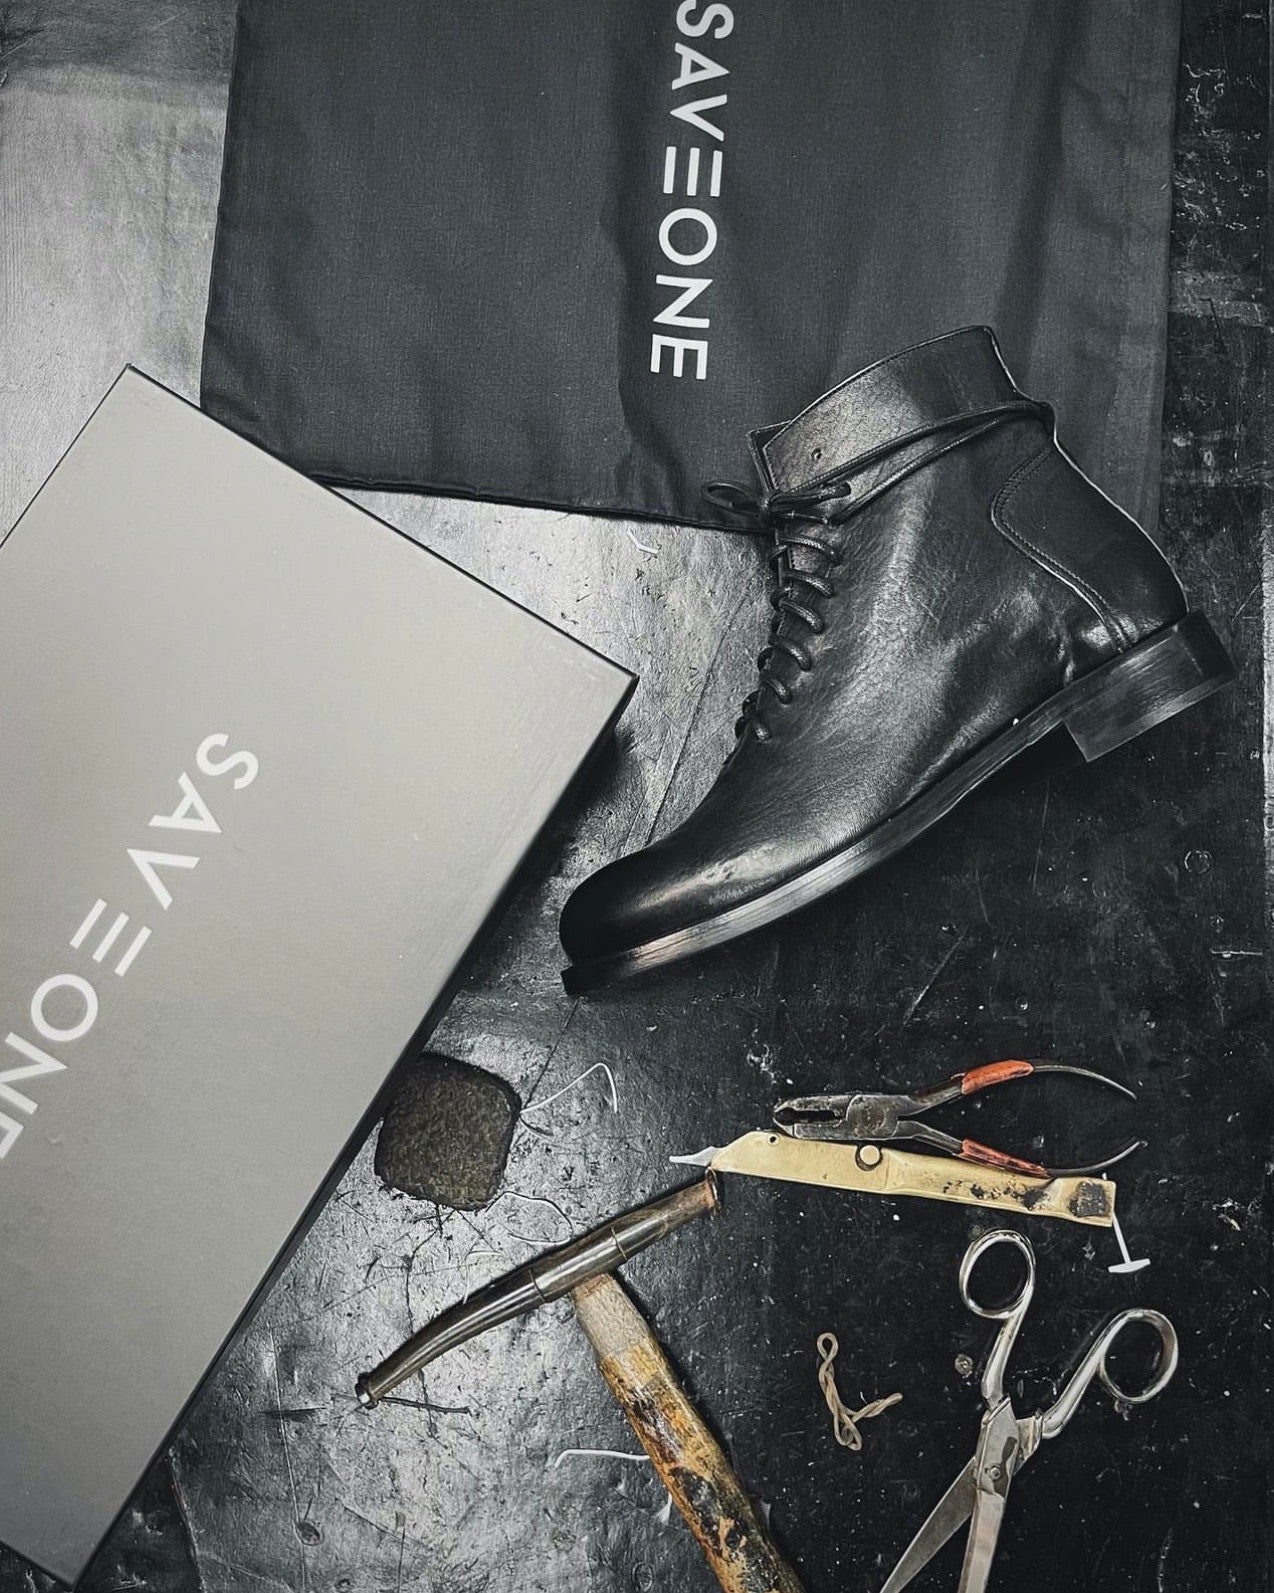 Houston - black leather boot